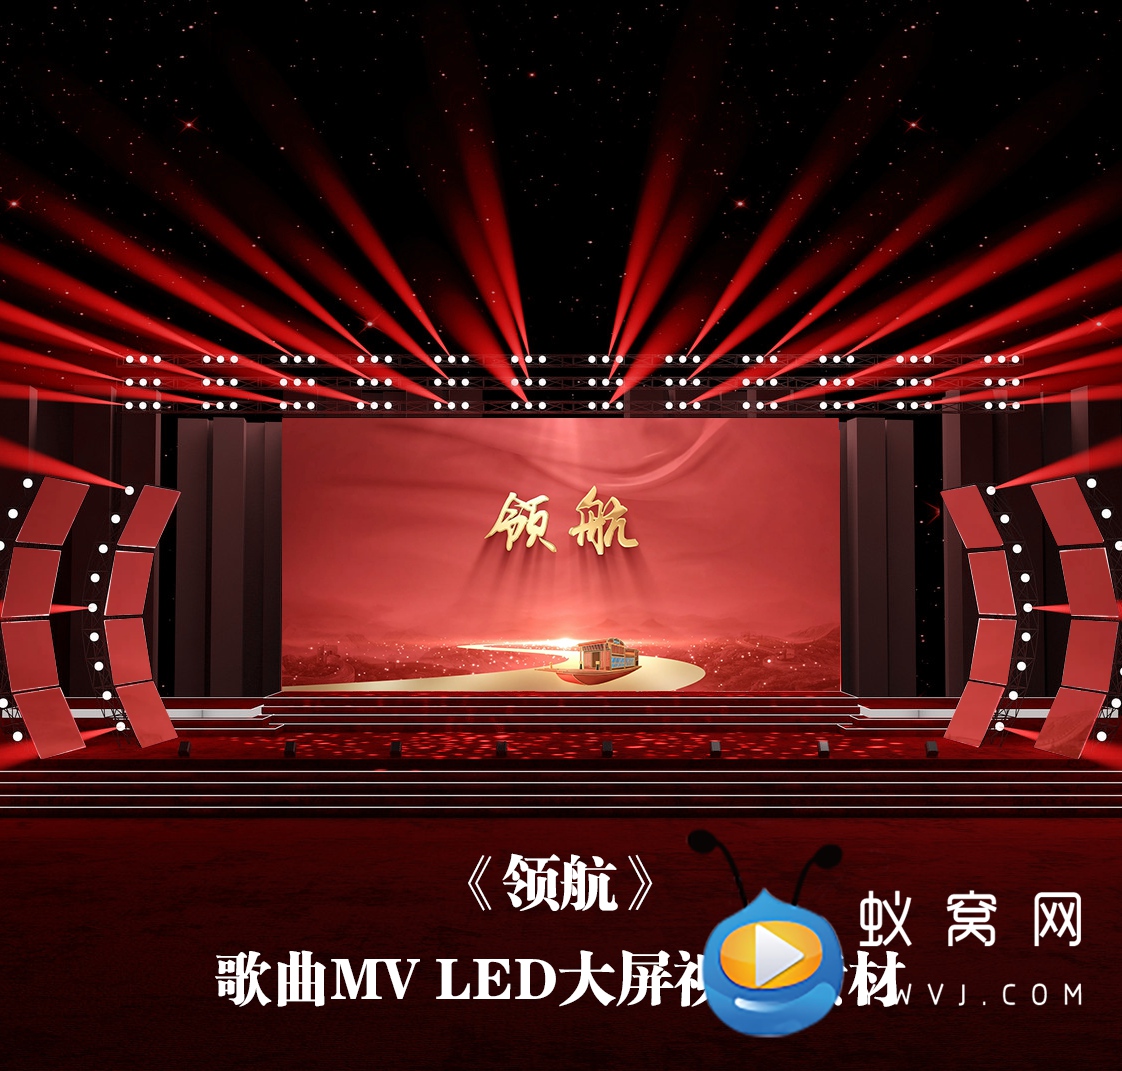  S3896《领航》大美中国 发展歌曲MV爱党 爱国LED大屏背景视频